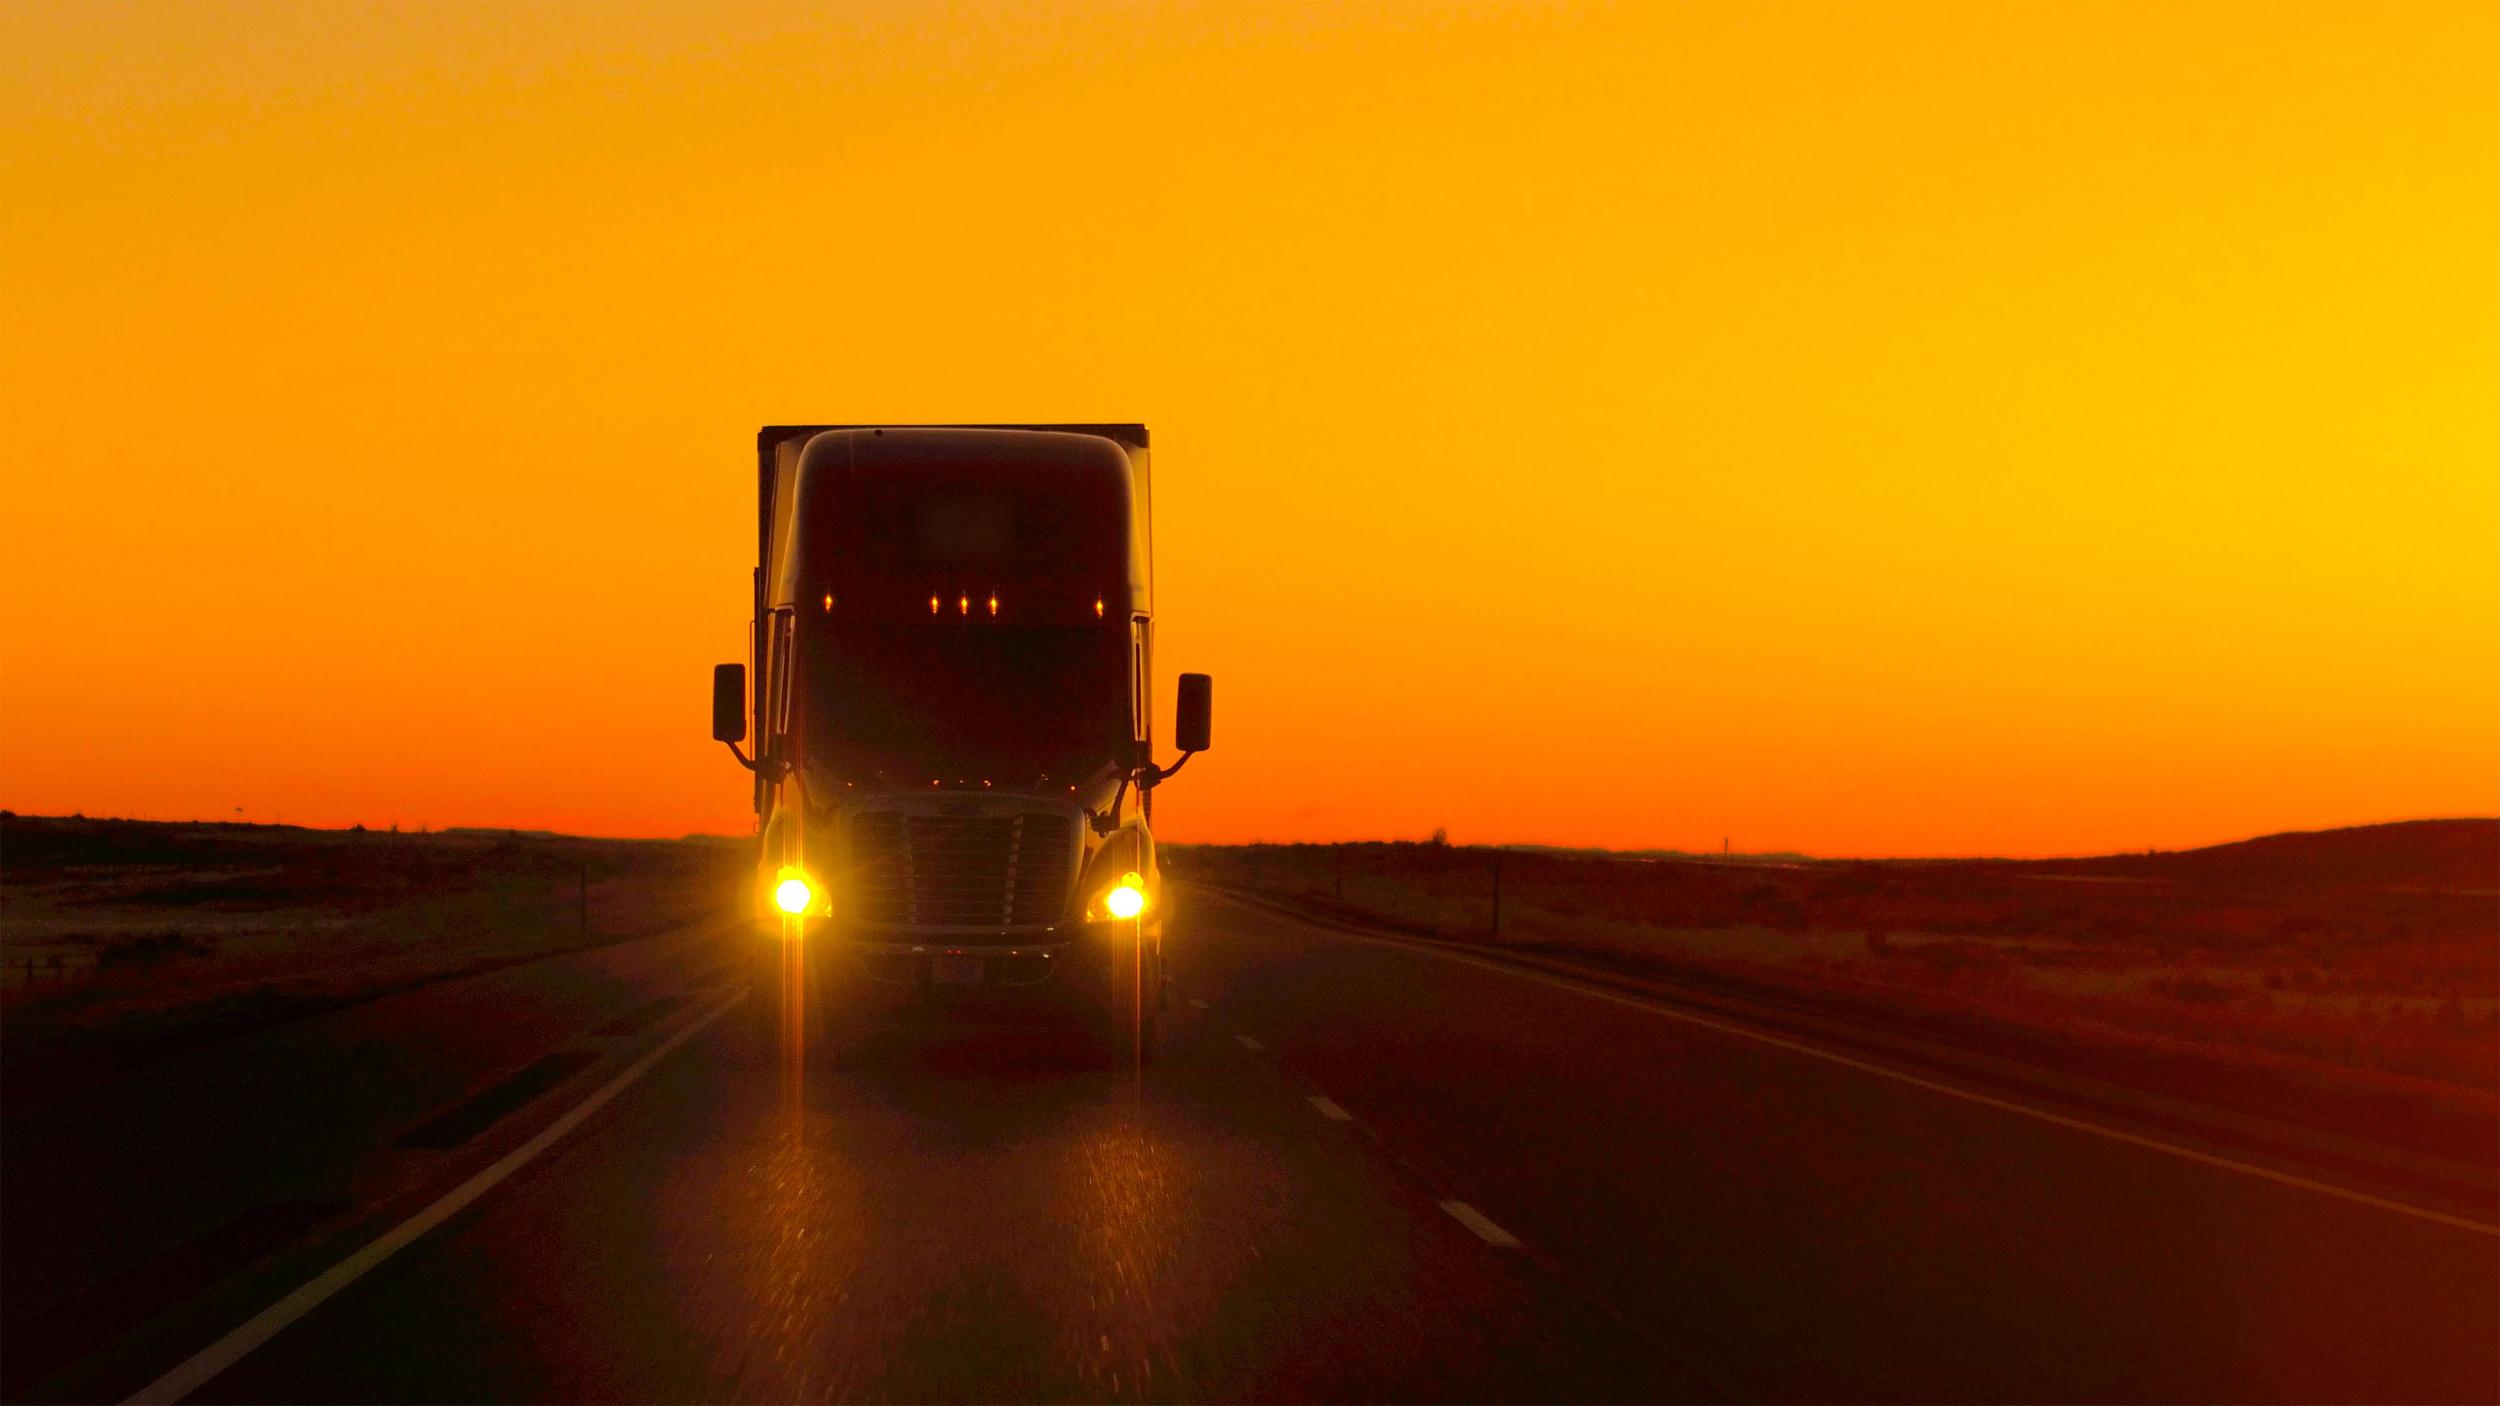 Commercial Truck Insurance California